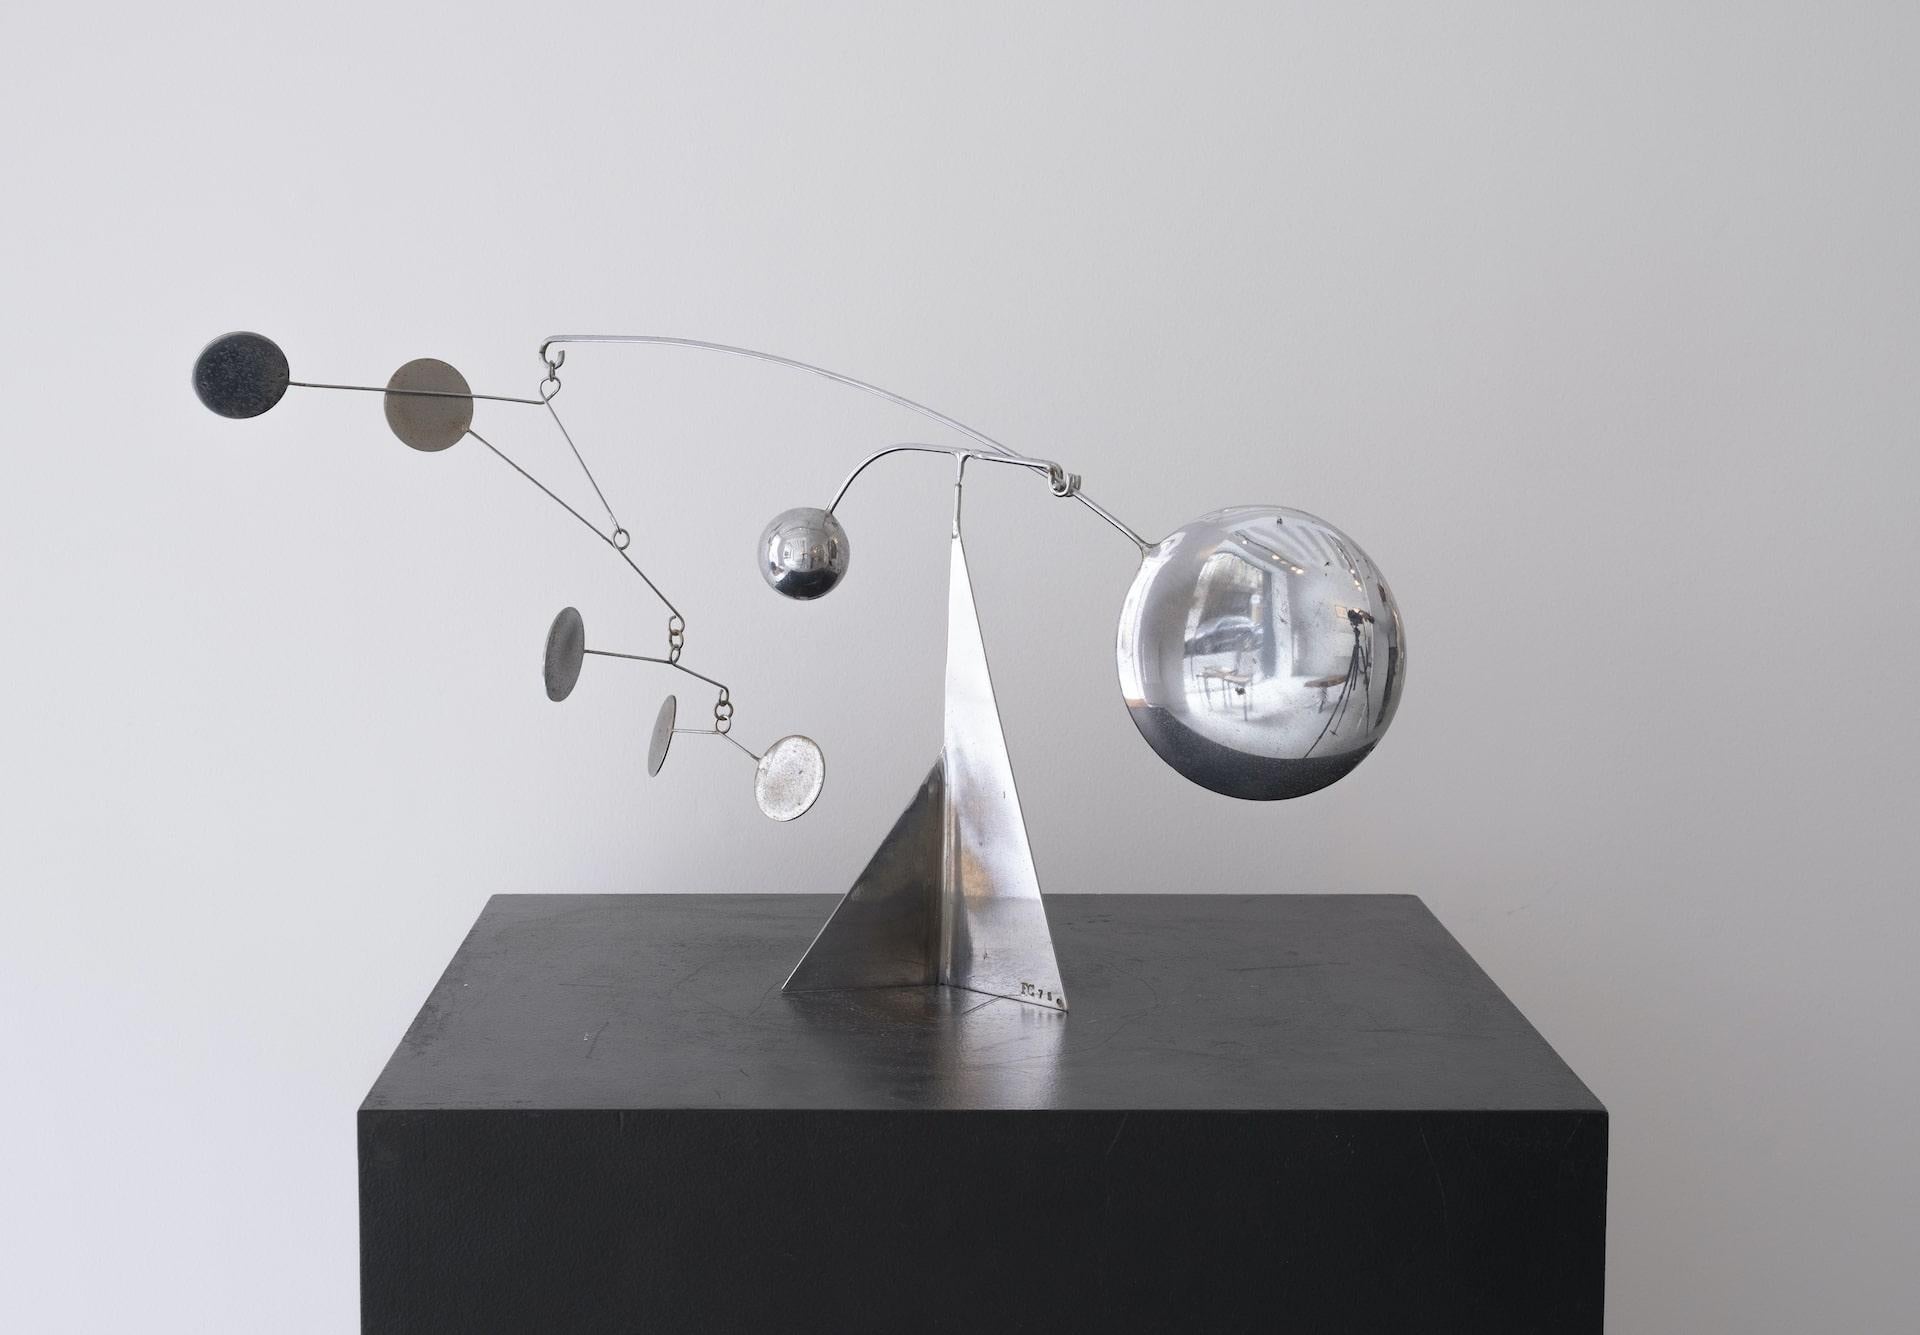 Kinetic Mobile Sculpture by François Collette